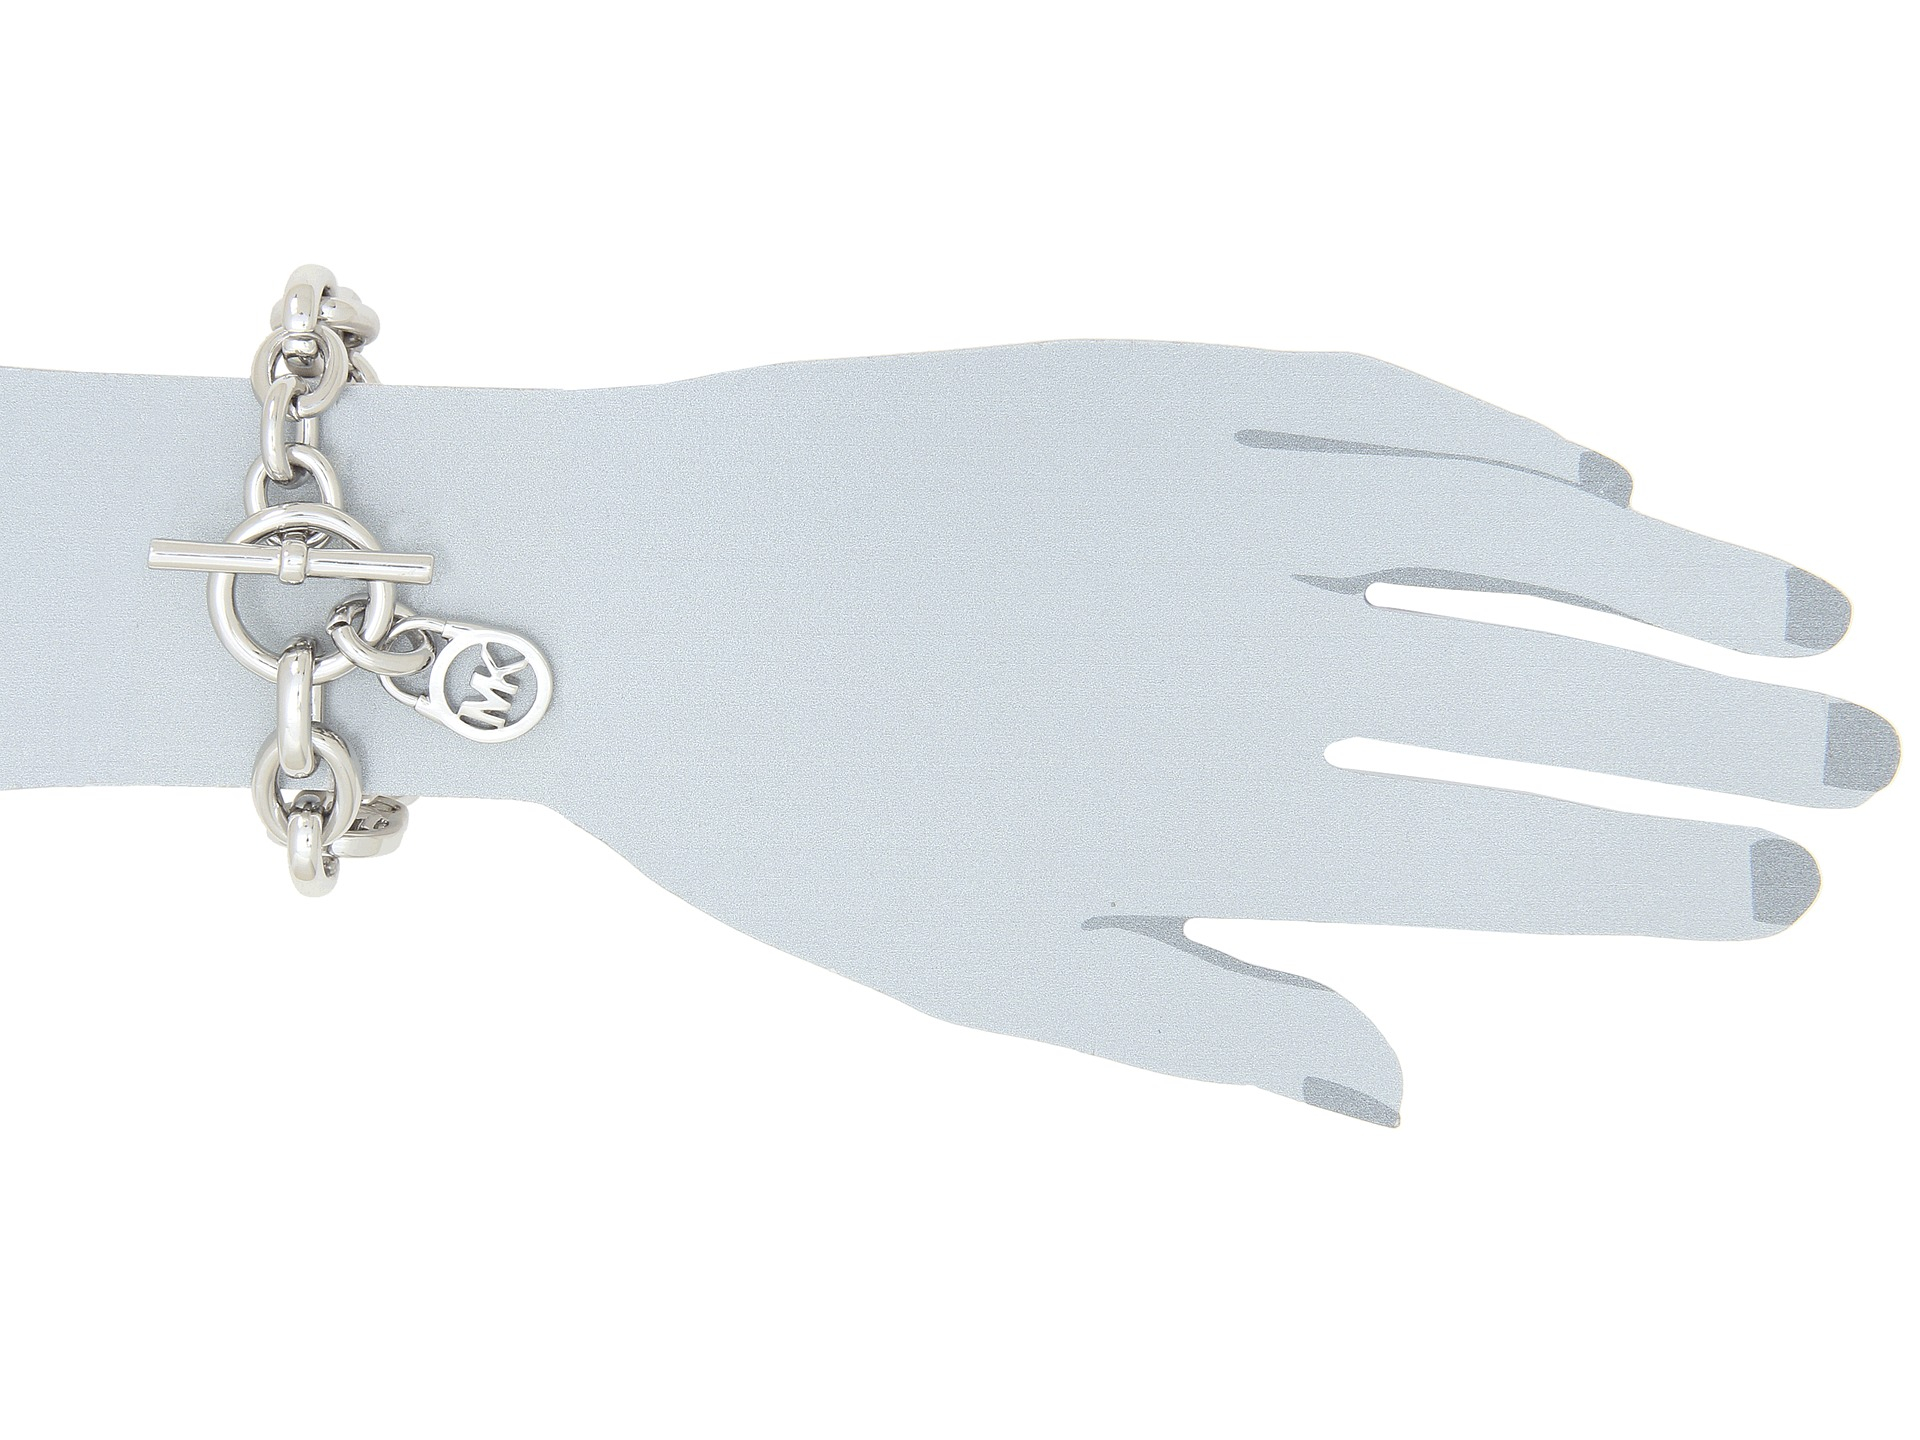 Michael Kors Heritage Link With Padlock Bracelet in Silver (Metallic) - Lyst